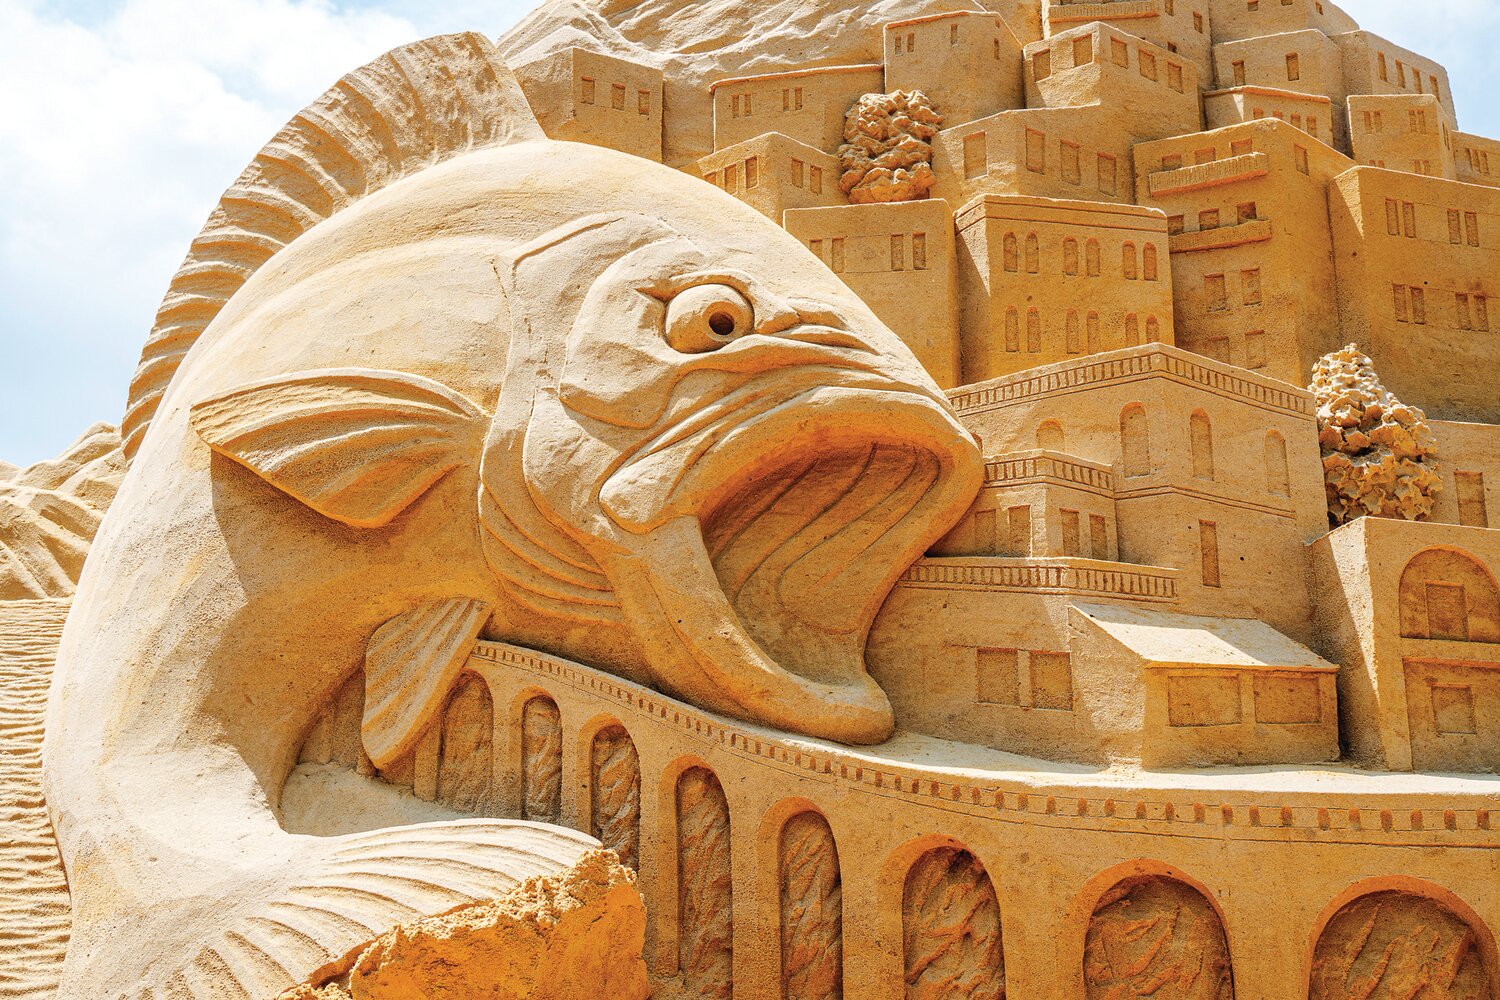 “Summer in Sand” at Peddler’s Village showcases five sand sculptures depicting favorite summer activities.